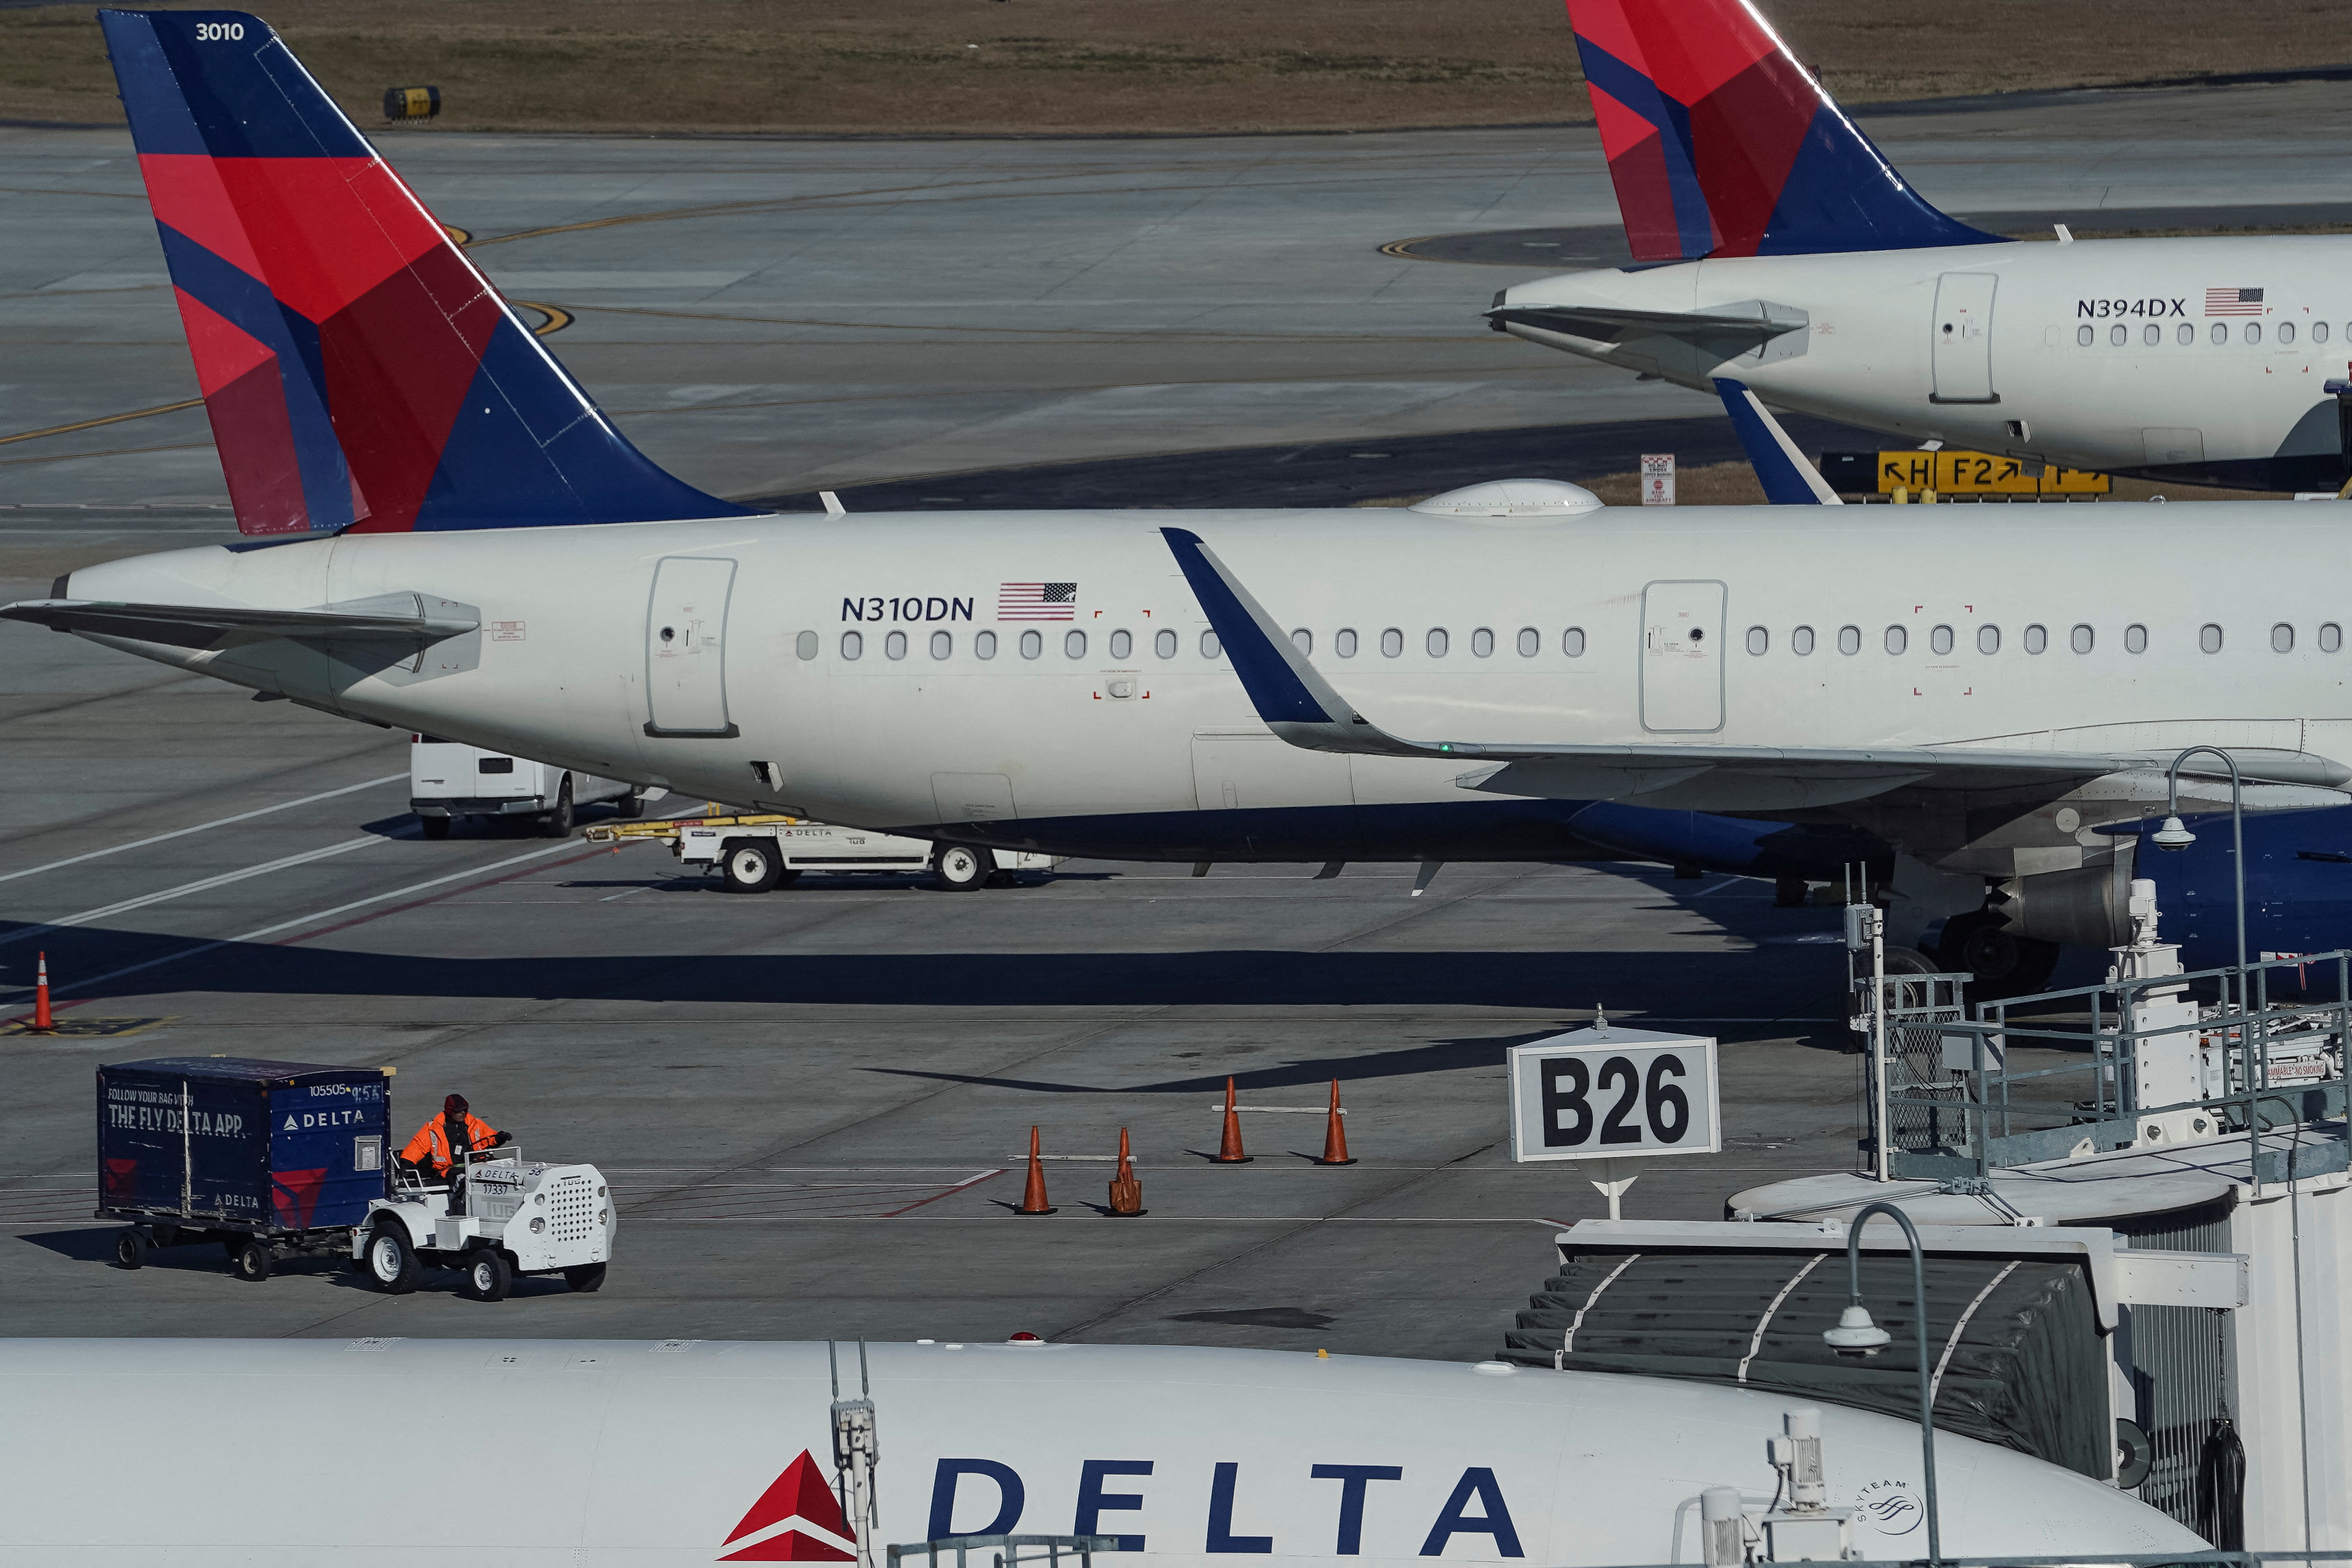 Delta Air Lines jets are seen at gates at Hartsfield-Jackson Atlanta International Airport in Atlanta, Georgia, U.S. December 22, 2021. REUTERS/Elijah Nouvelage